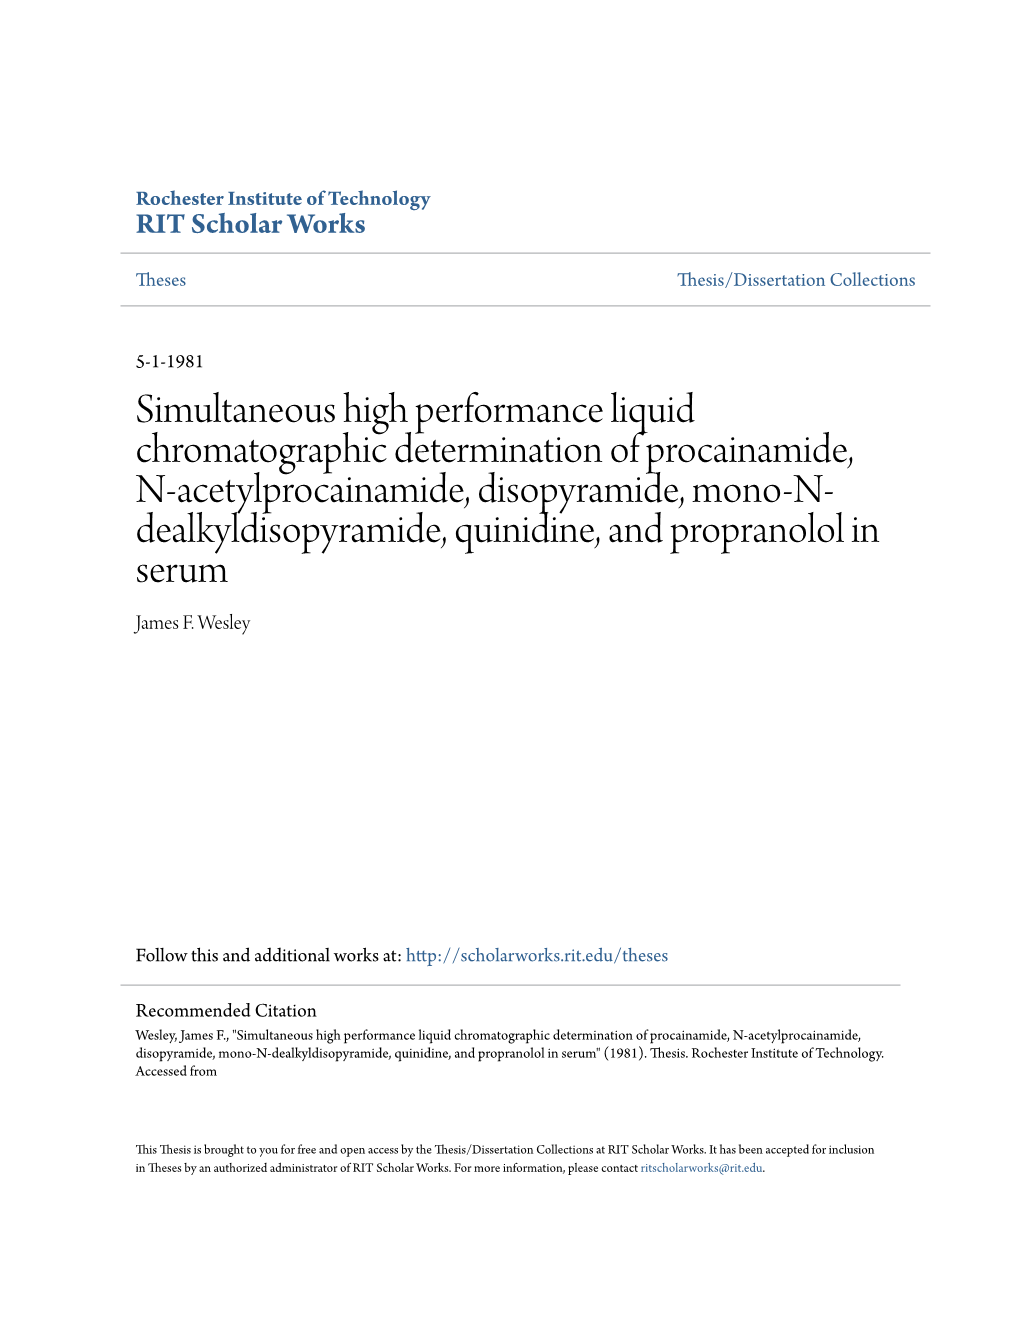 Simultaneous High Performance Liquid Chromatographic Determination Of